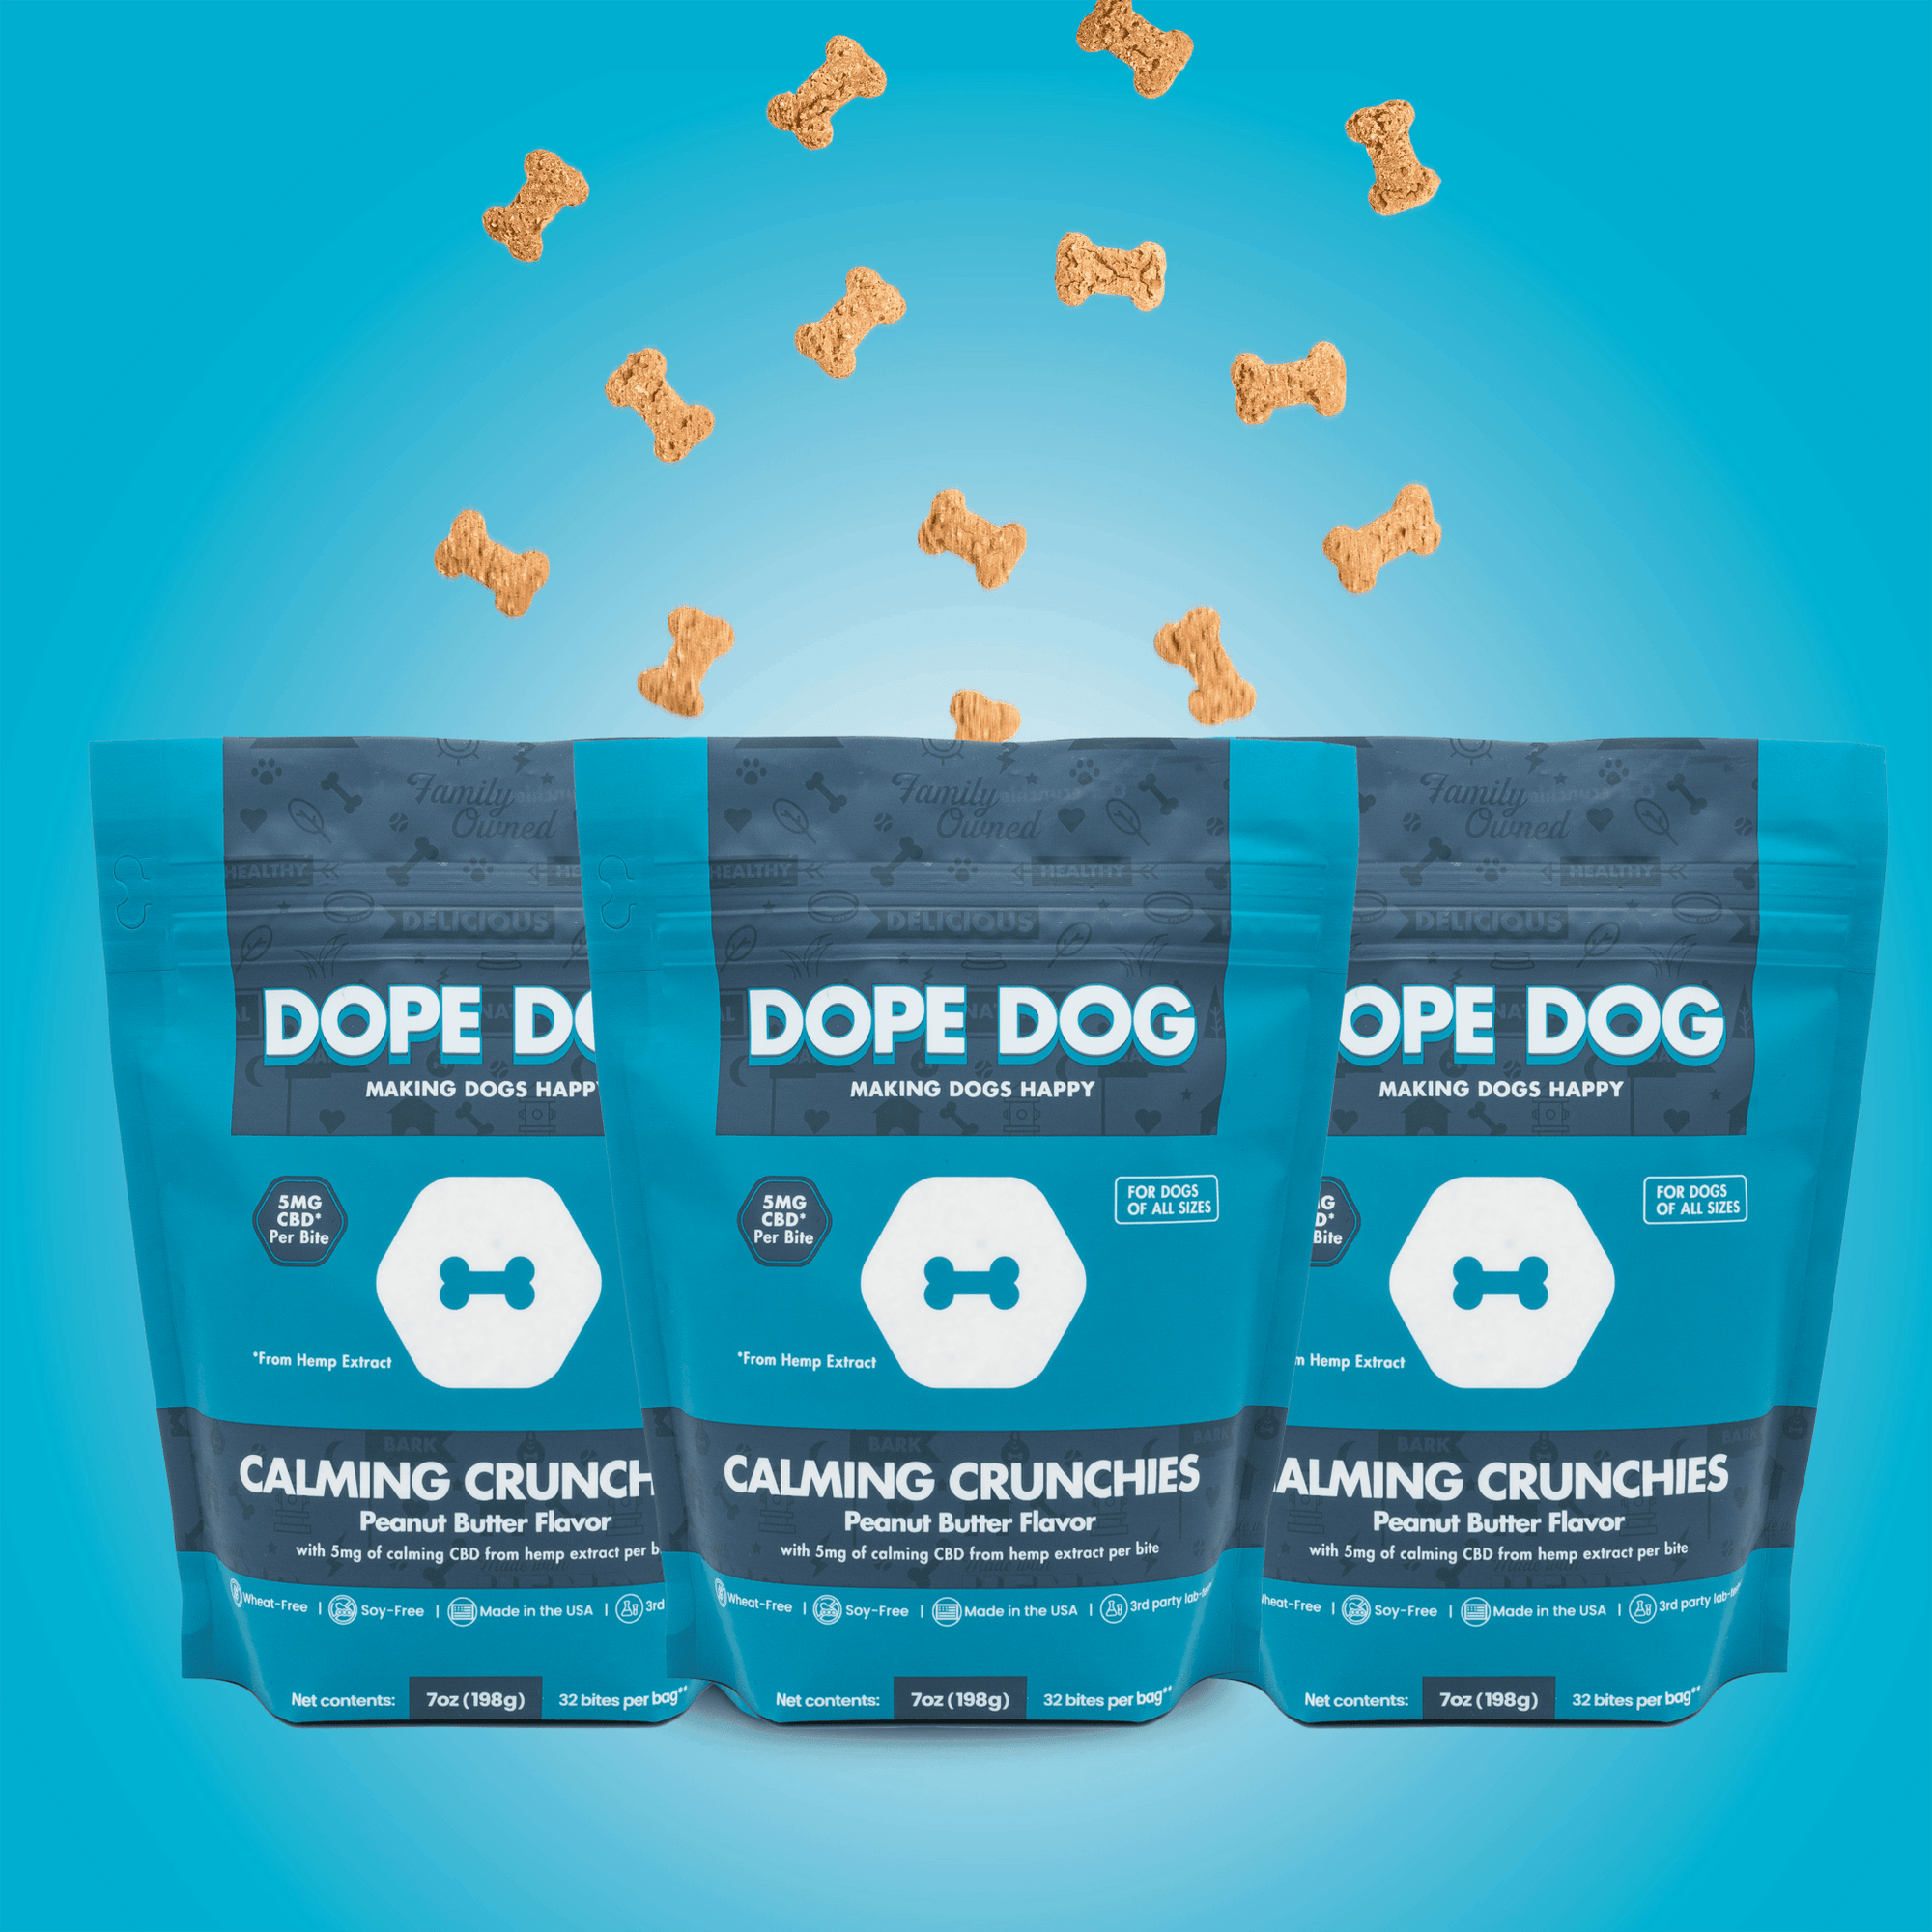 Calming Crunchies - Peanut Butter CBD Dog Treats - Dope Dog 